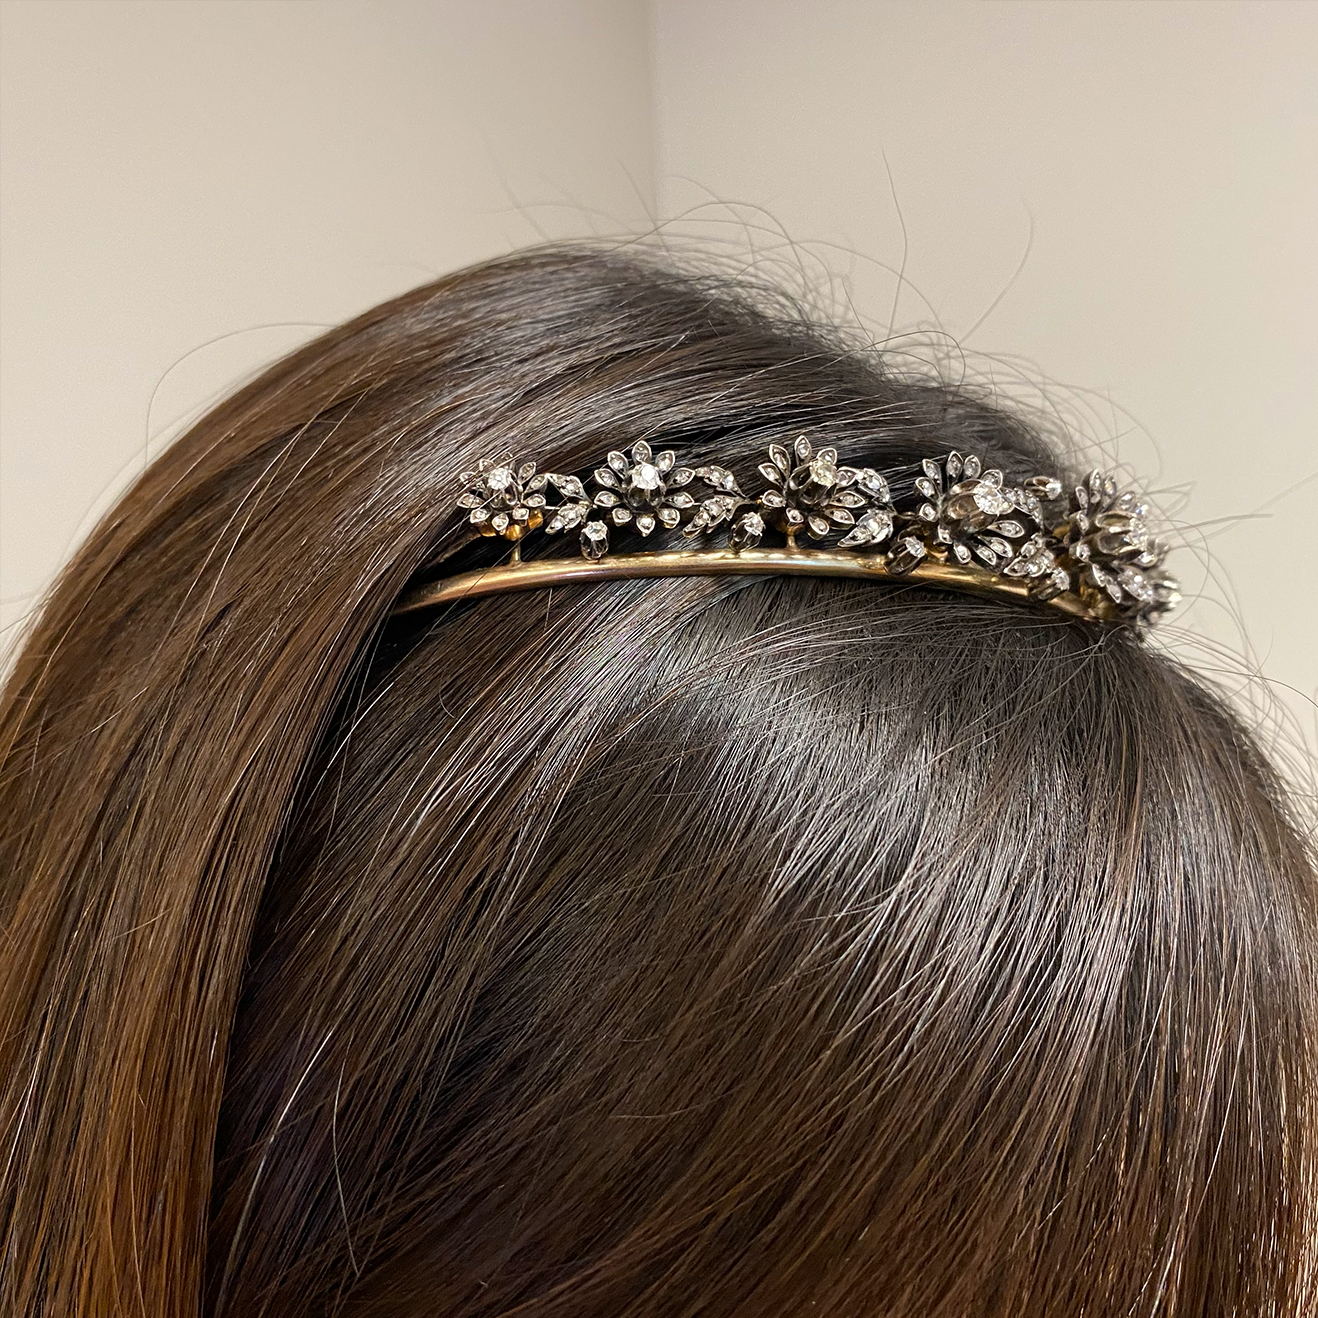 Victorian Silver & 18KT Yellow Gold Diamond Tiara / Necklace worn as tiara in hair